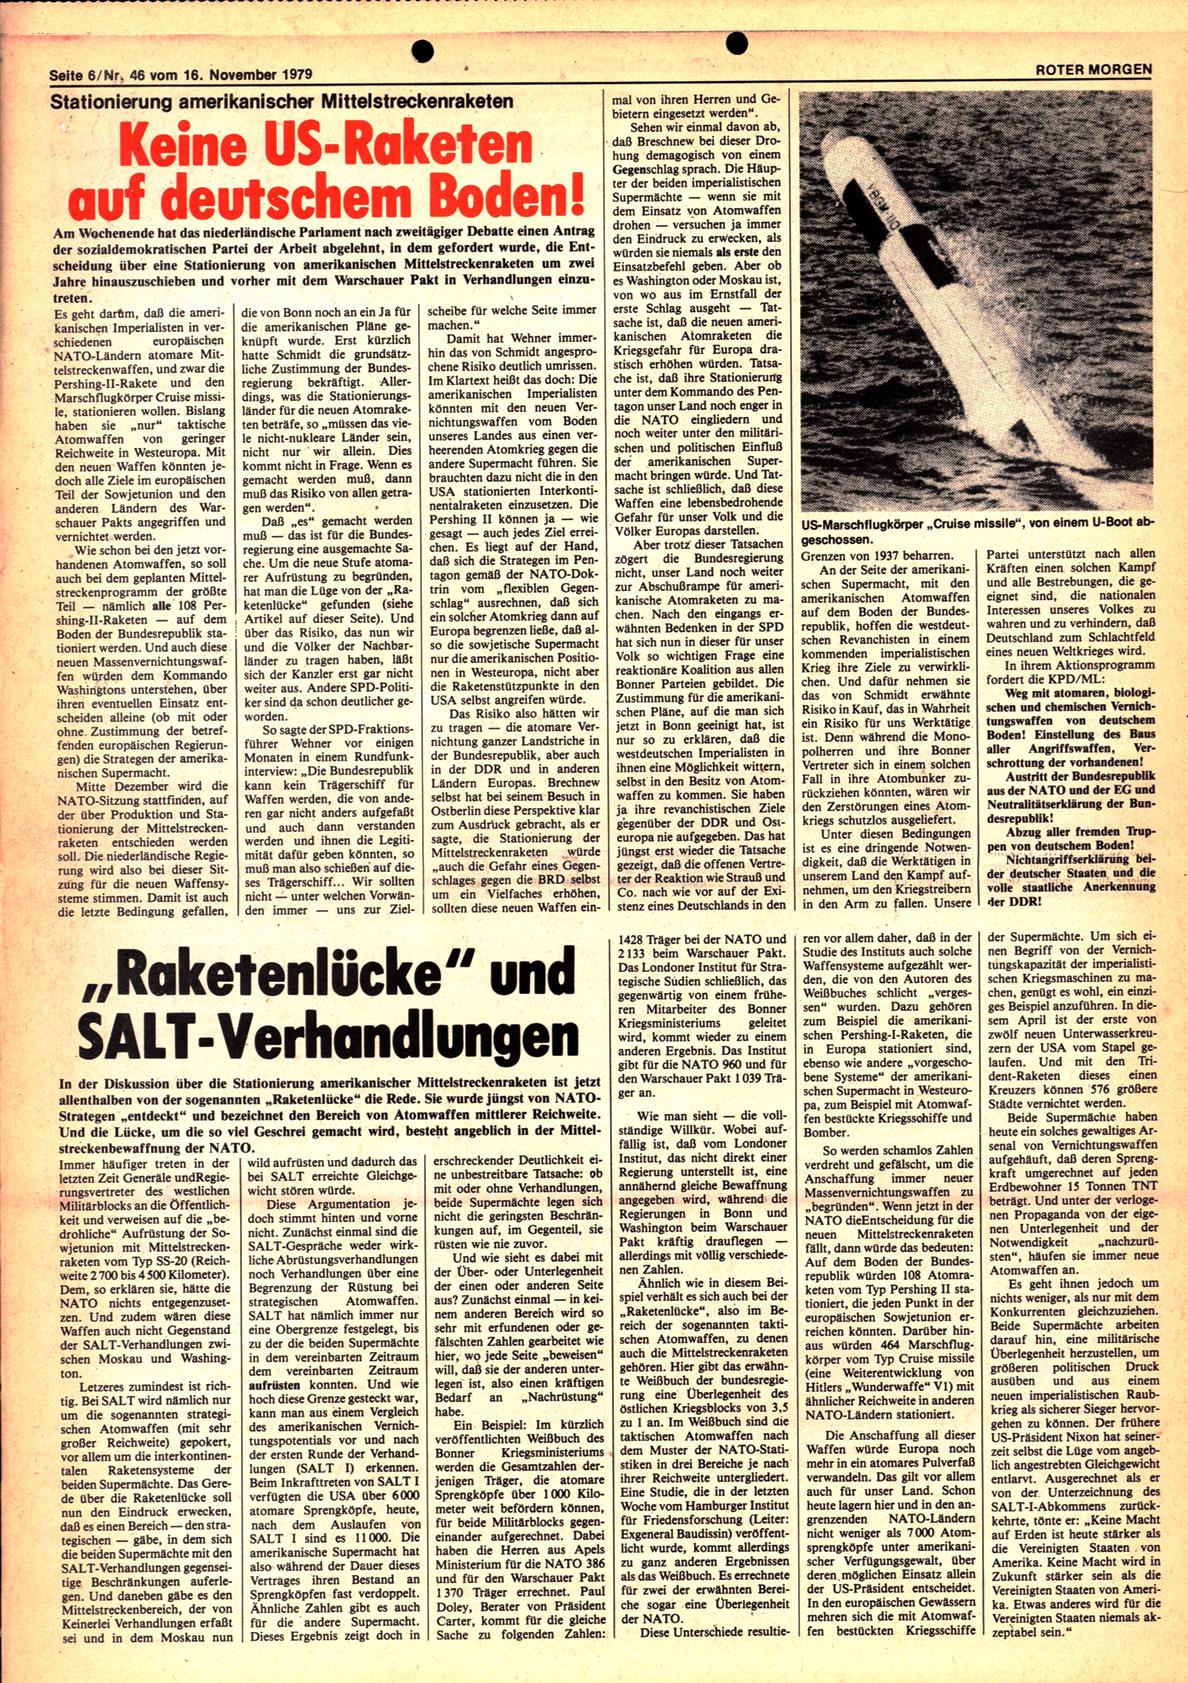 Roter Morgen, 13. Jg., 16. November 1979, Nr. 46, Seite 6